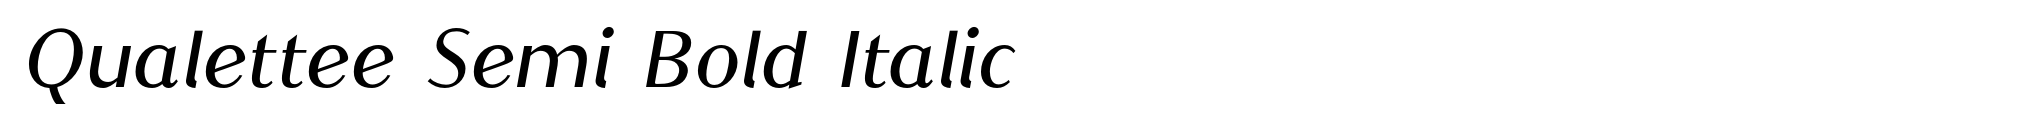 Qualettee Semi Bold Italic image